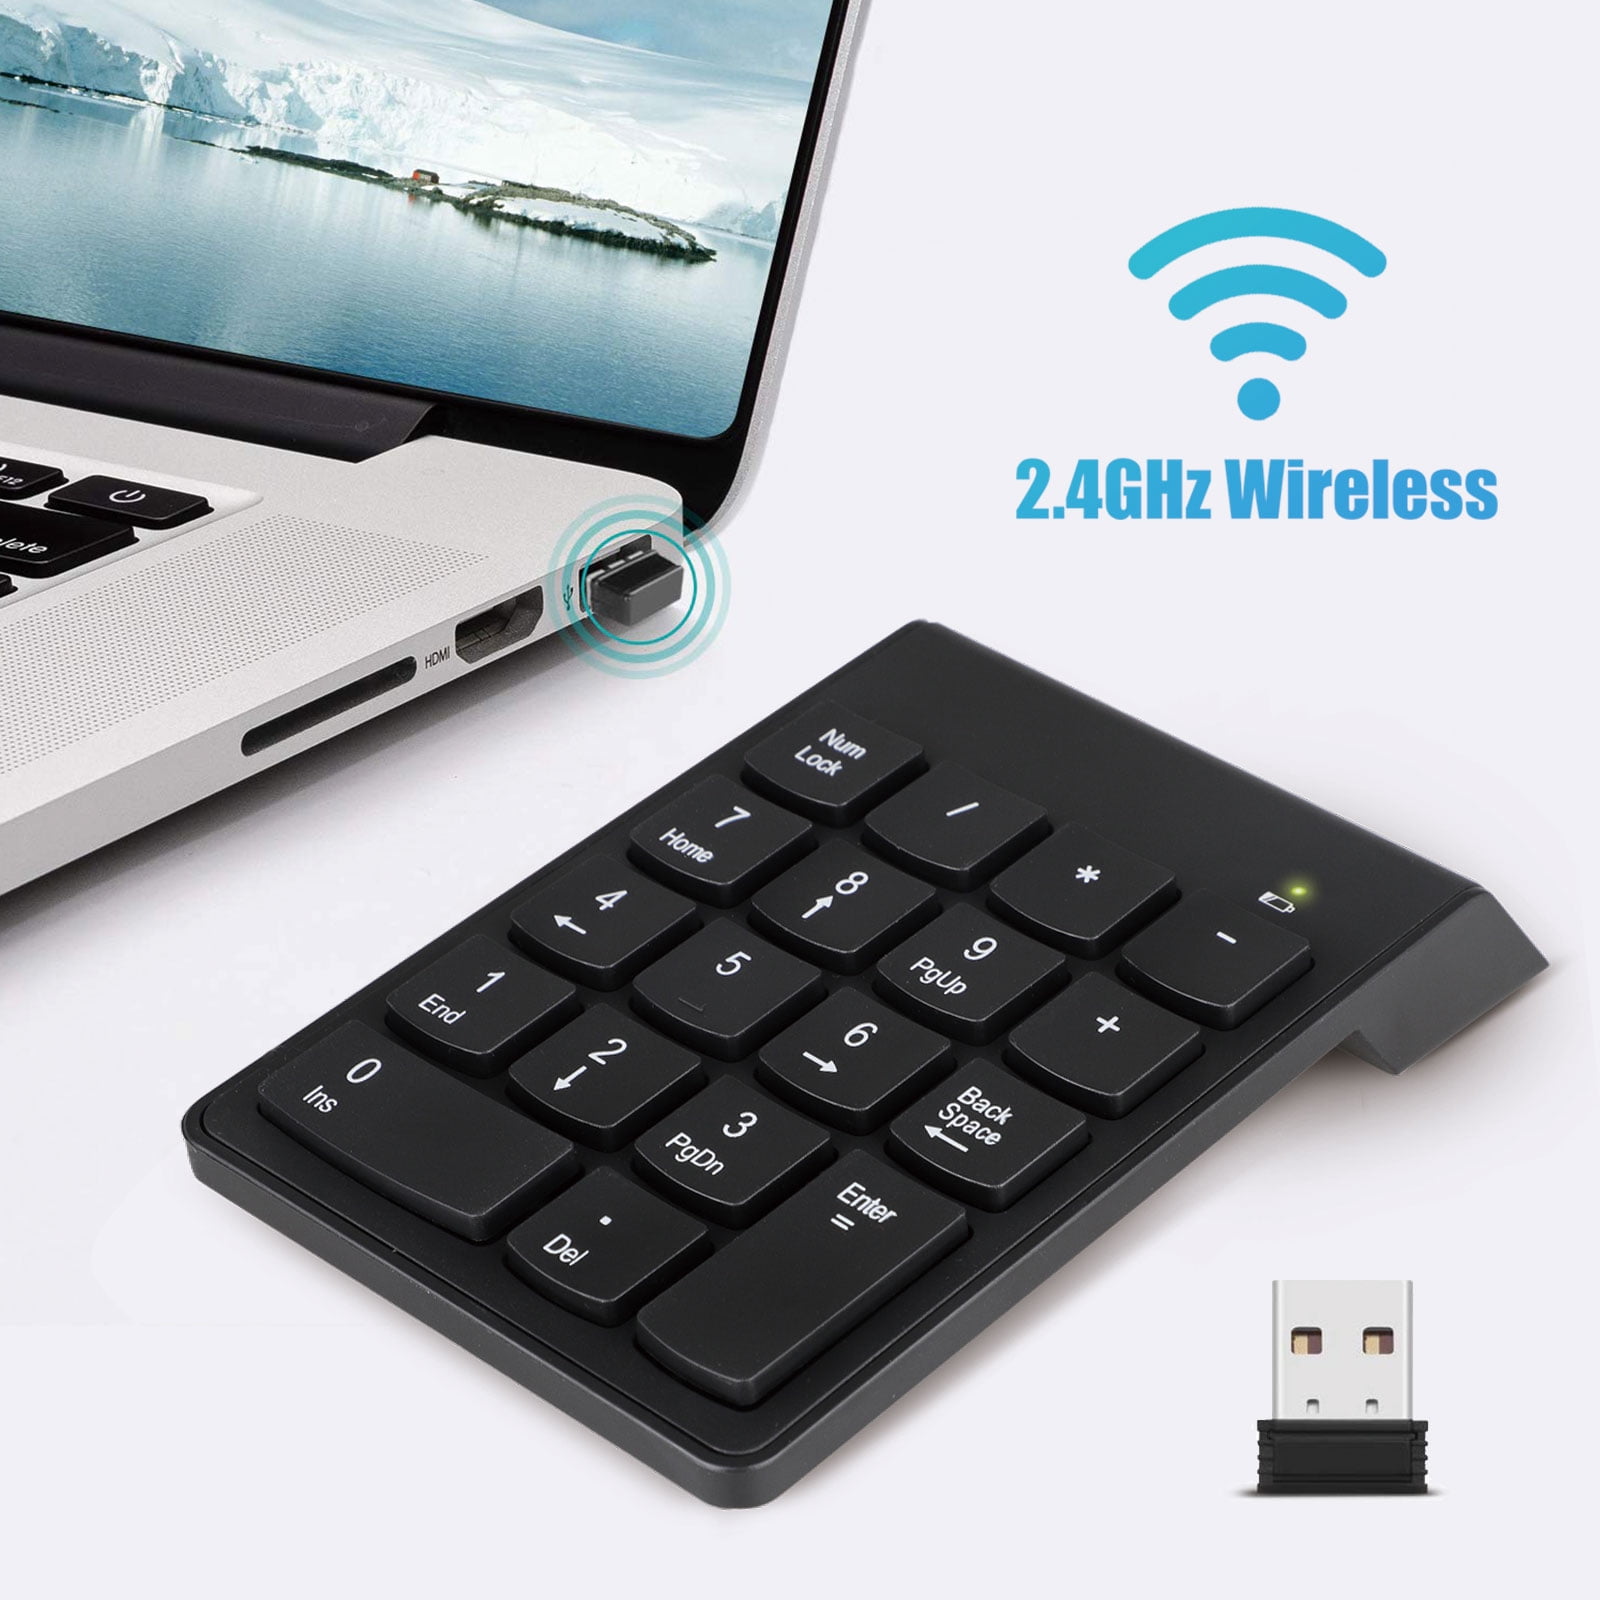 Portable Mini USB Numeric Keypad with 19 Keys Number Keyboard for MacBook Desktop PC. Laptop Garsent Number Pad